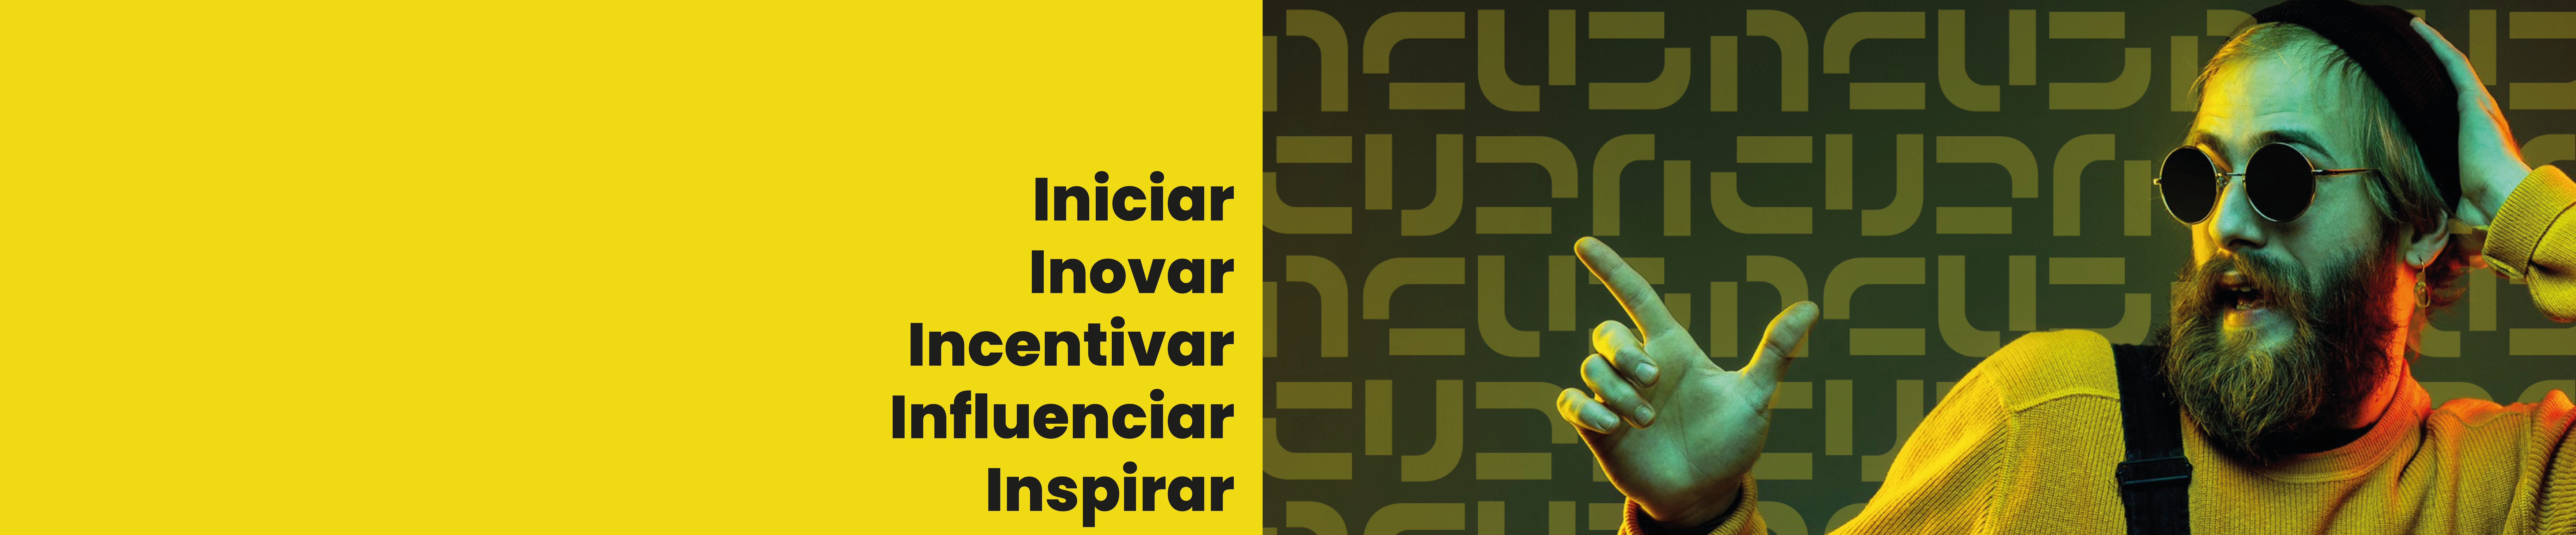 Inspira Studio Design's profile banner